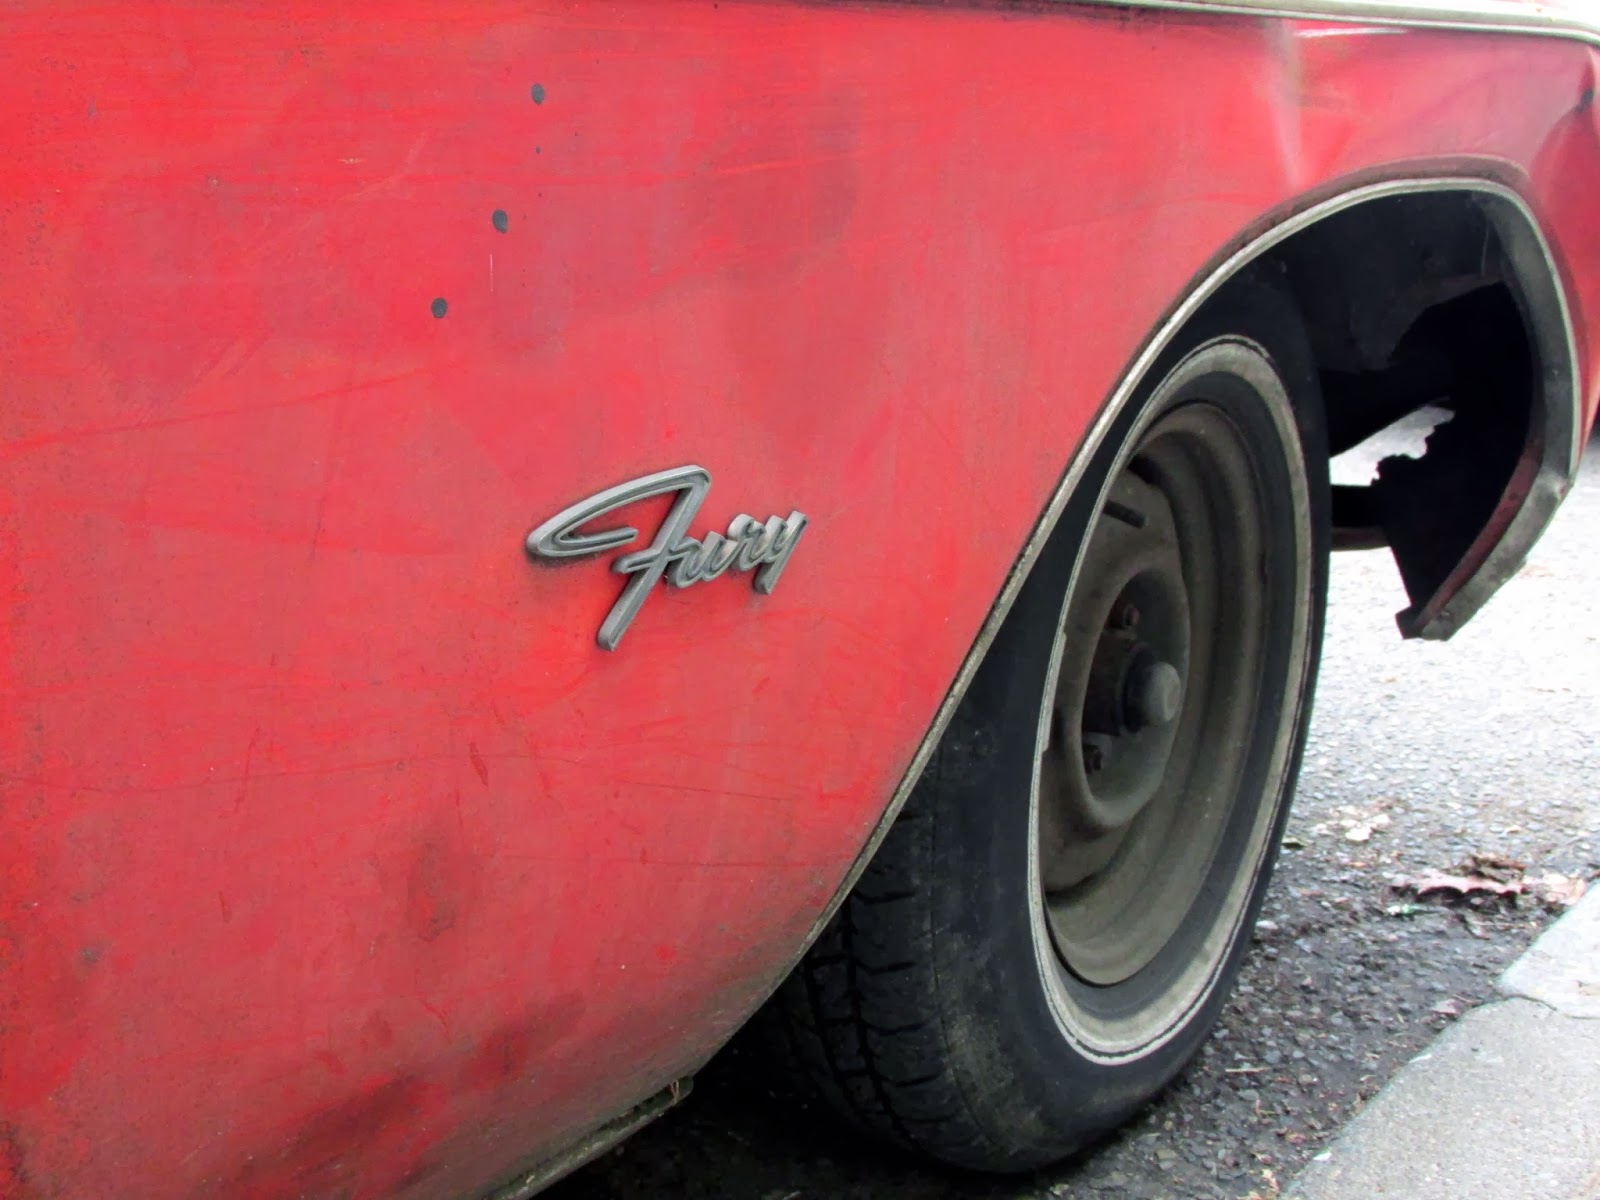 Seattle's Classics: 1973 Plymouth Fury Gran Sedan